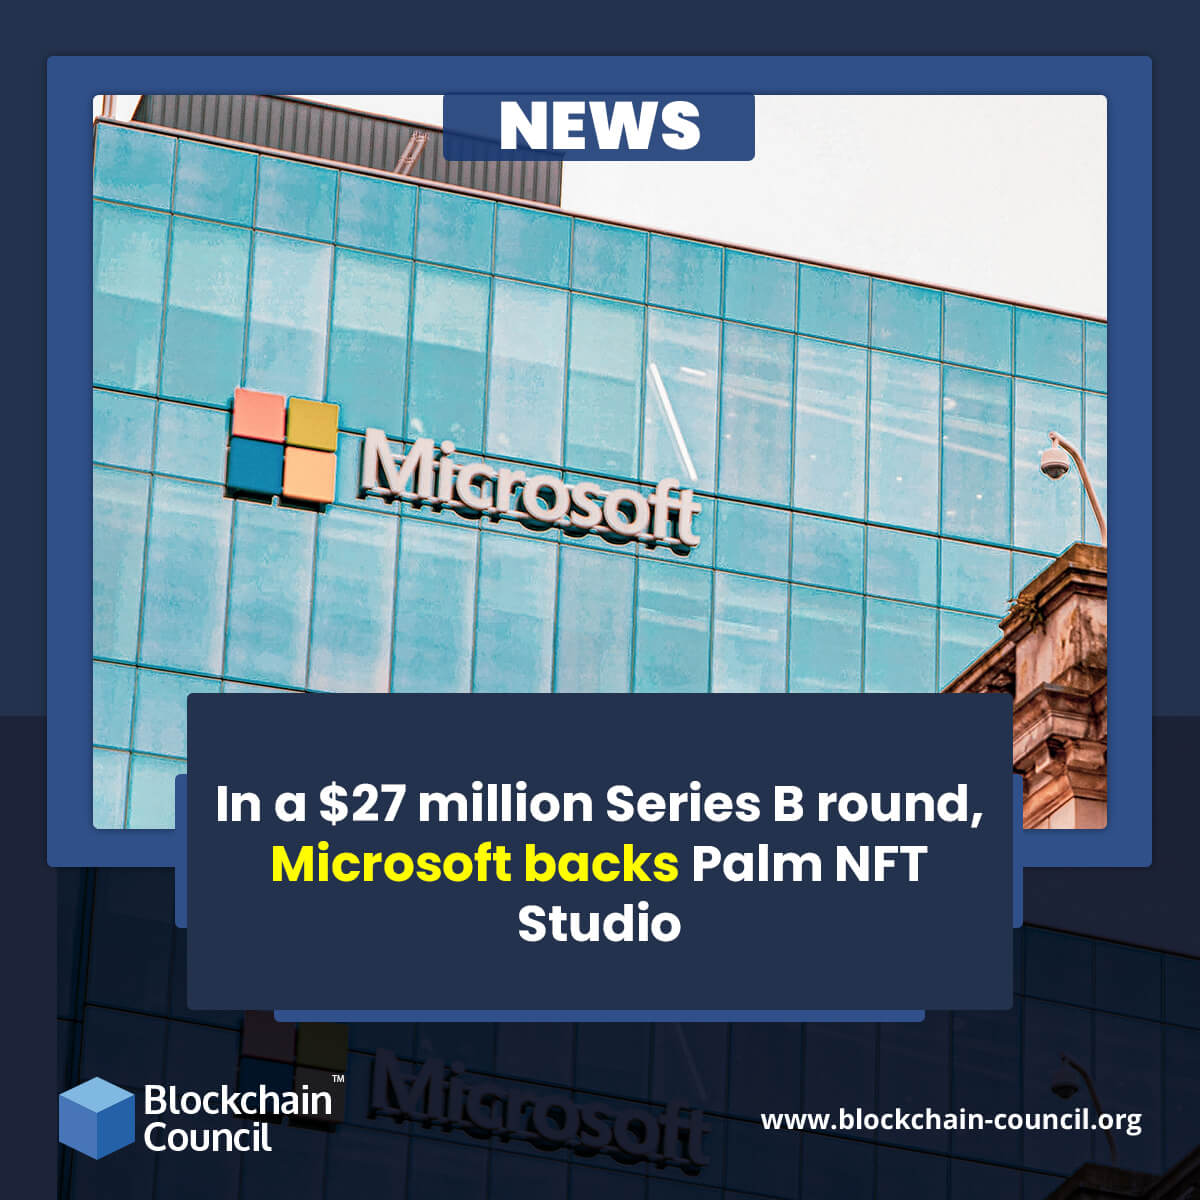 In a $27 million Series B round, Microsoft backs Palm NFT Studio